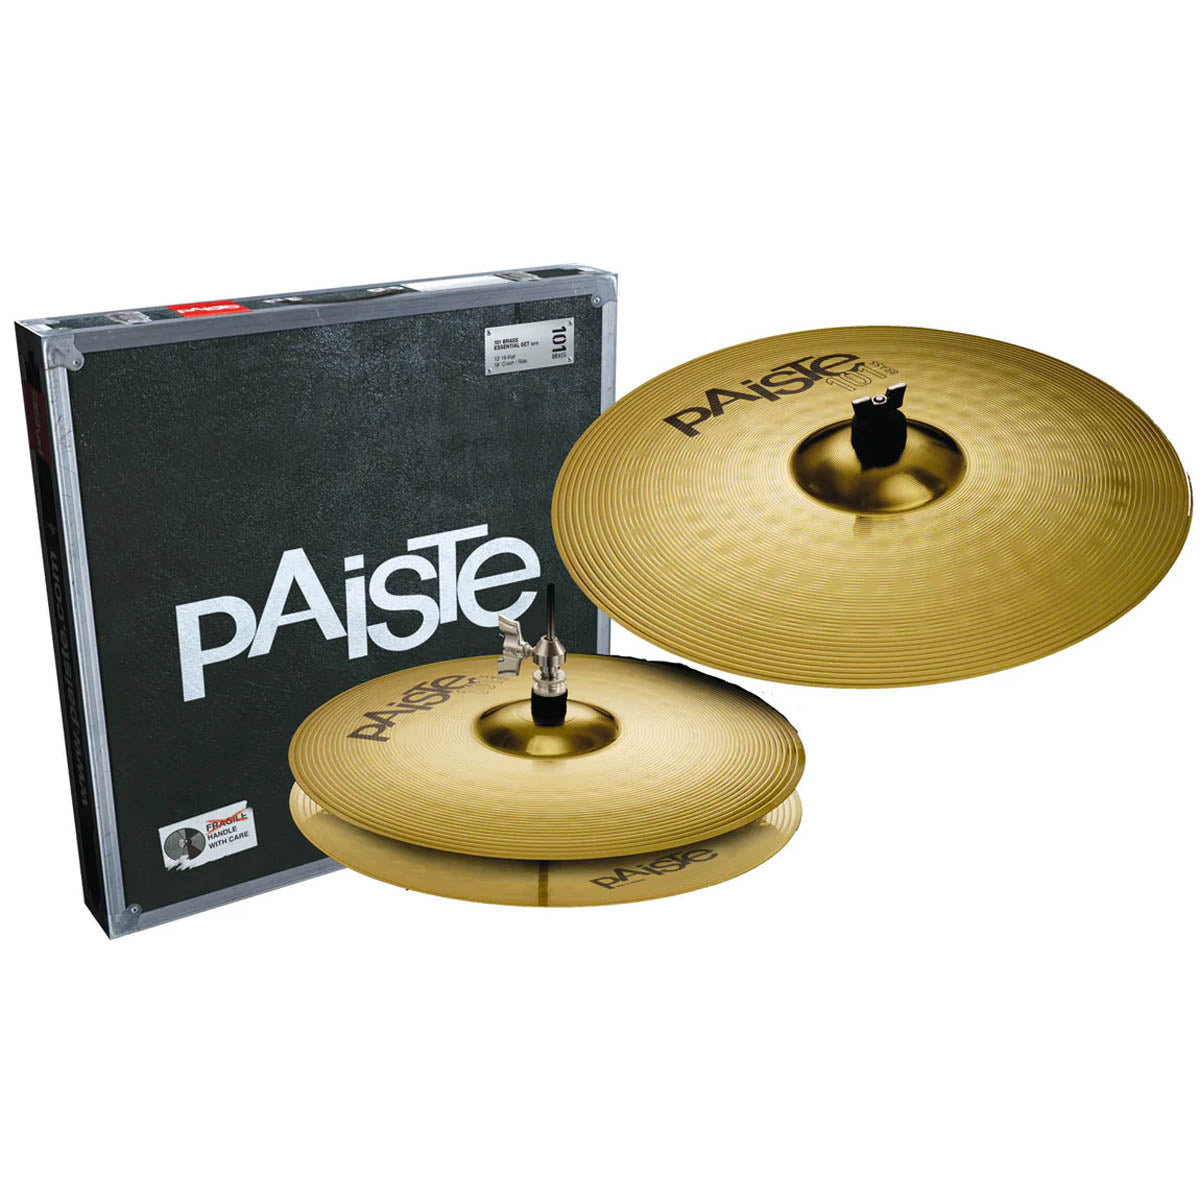 Paiste 101 Brass Essential Set (14" Hats & 18" Crash/Ride)